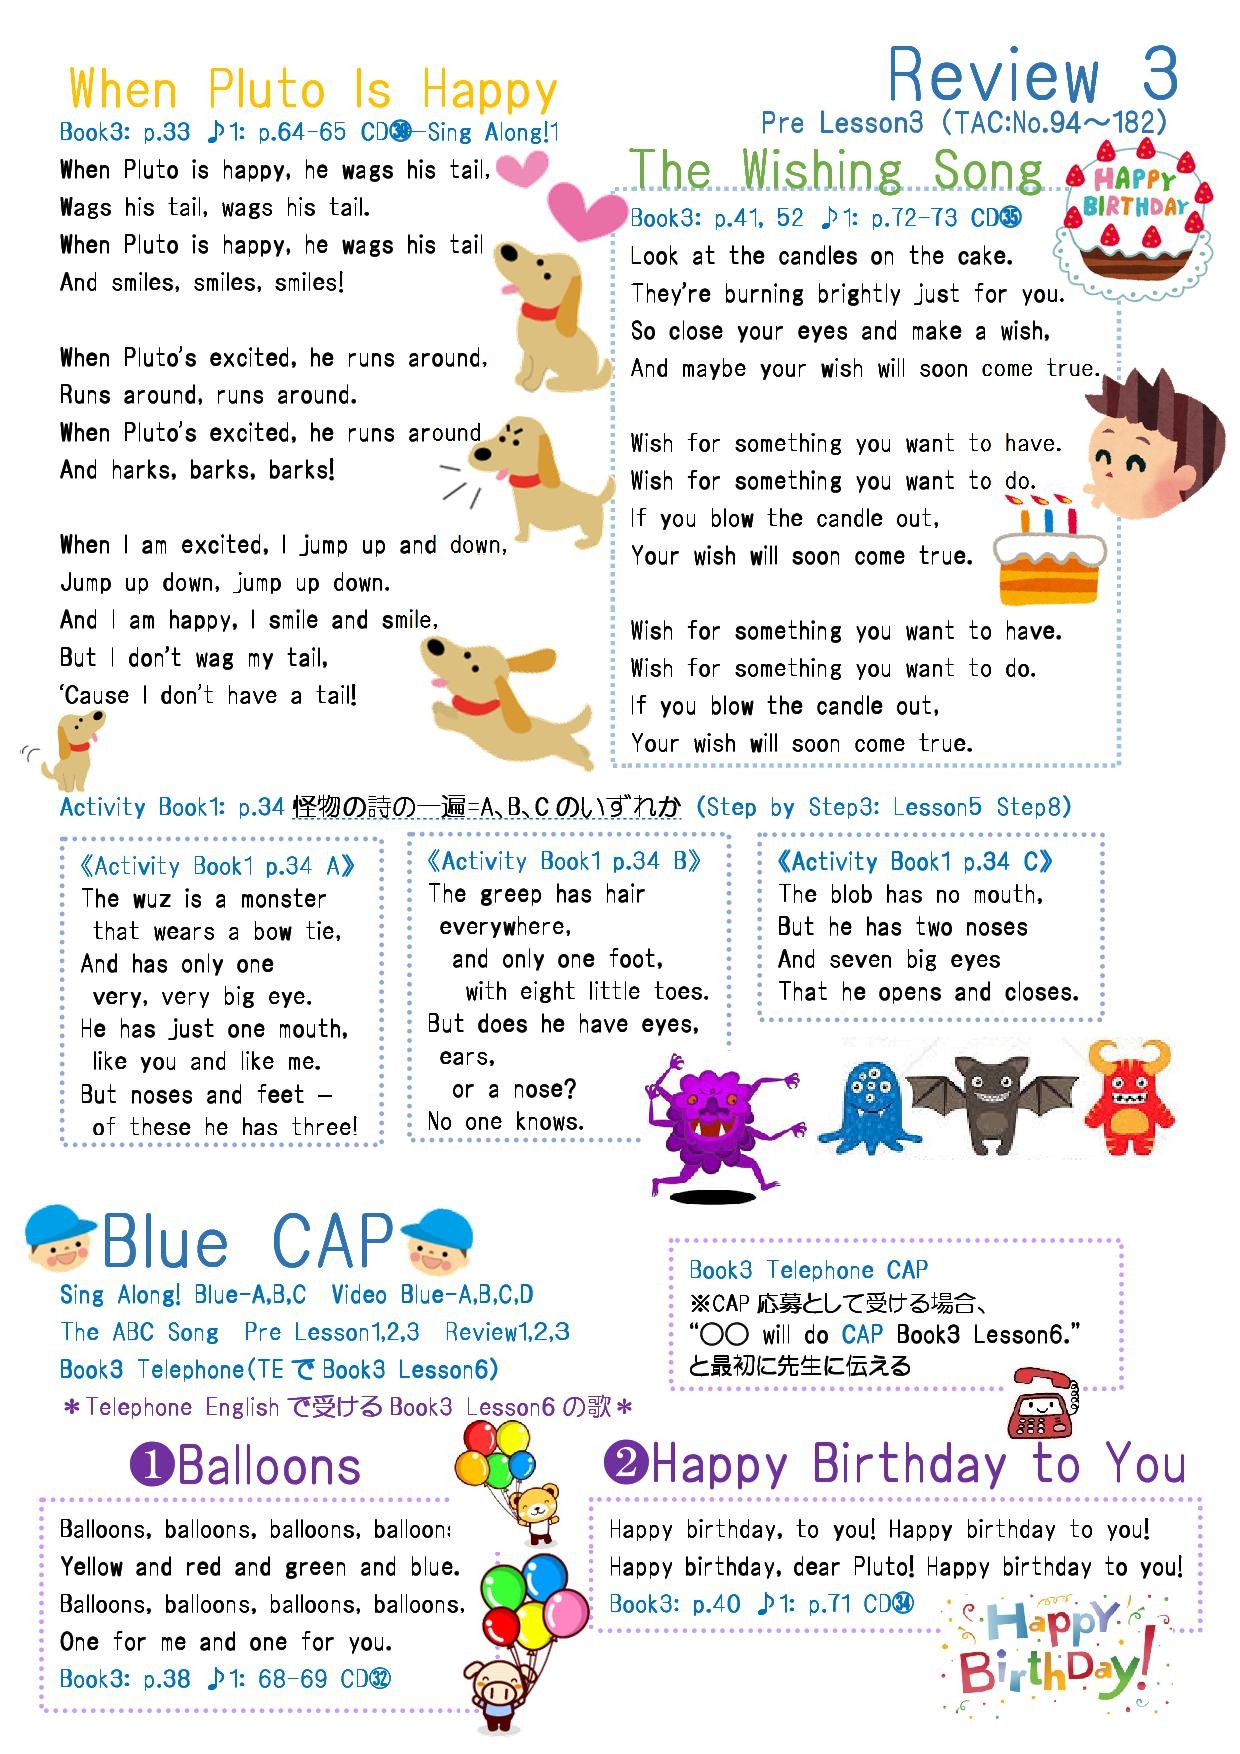 Wfc Cap Review3 ディズニーの英語システム Dwe 大好きママのブログ 幼児 赤ちゃん 子供 キッズ 向けの英語教材の使い方 活用法